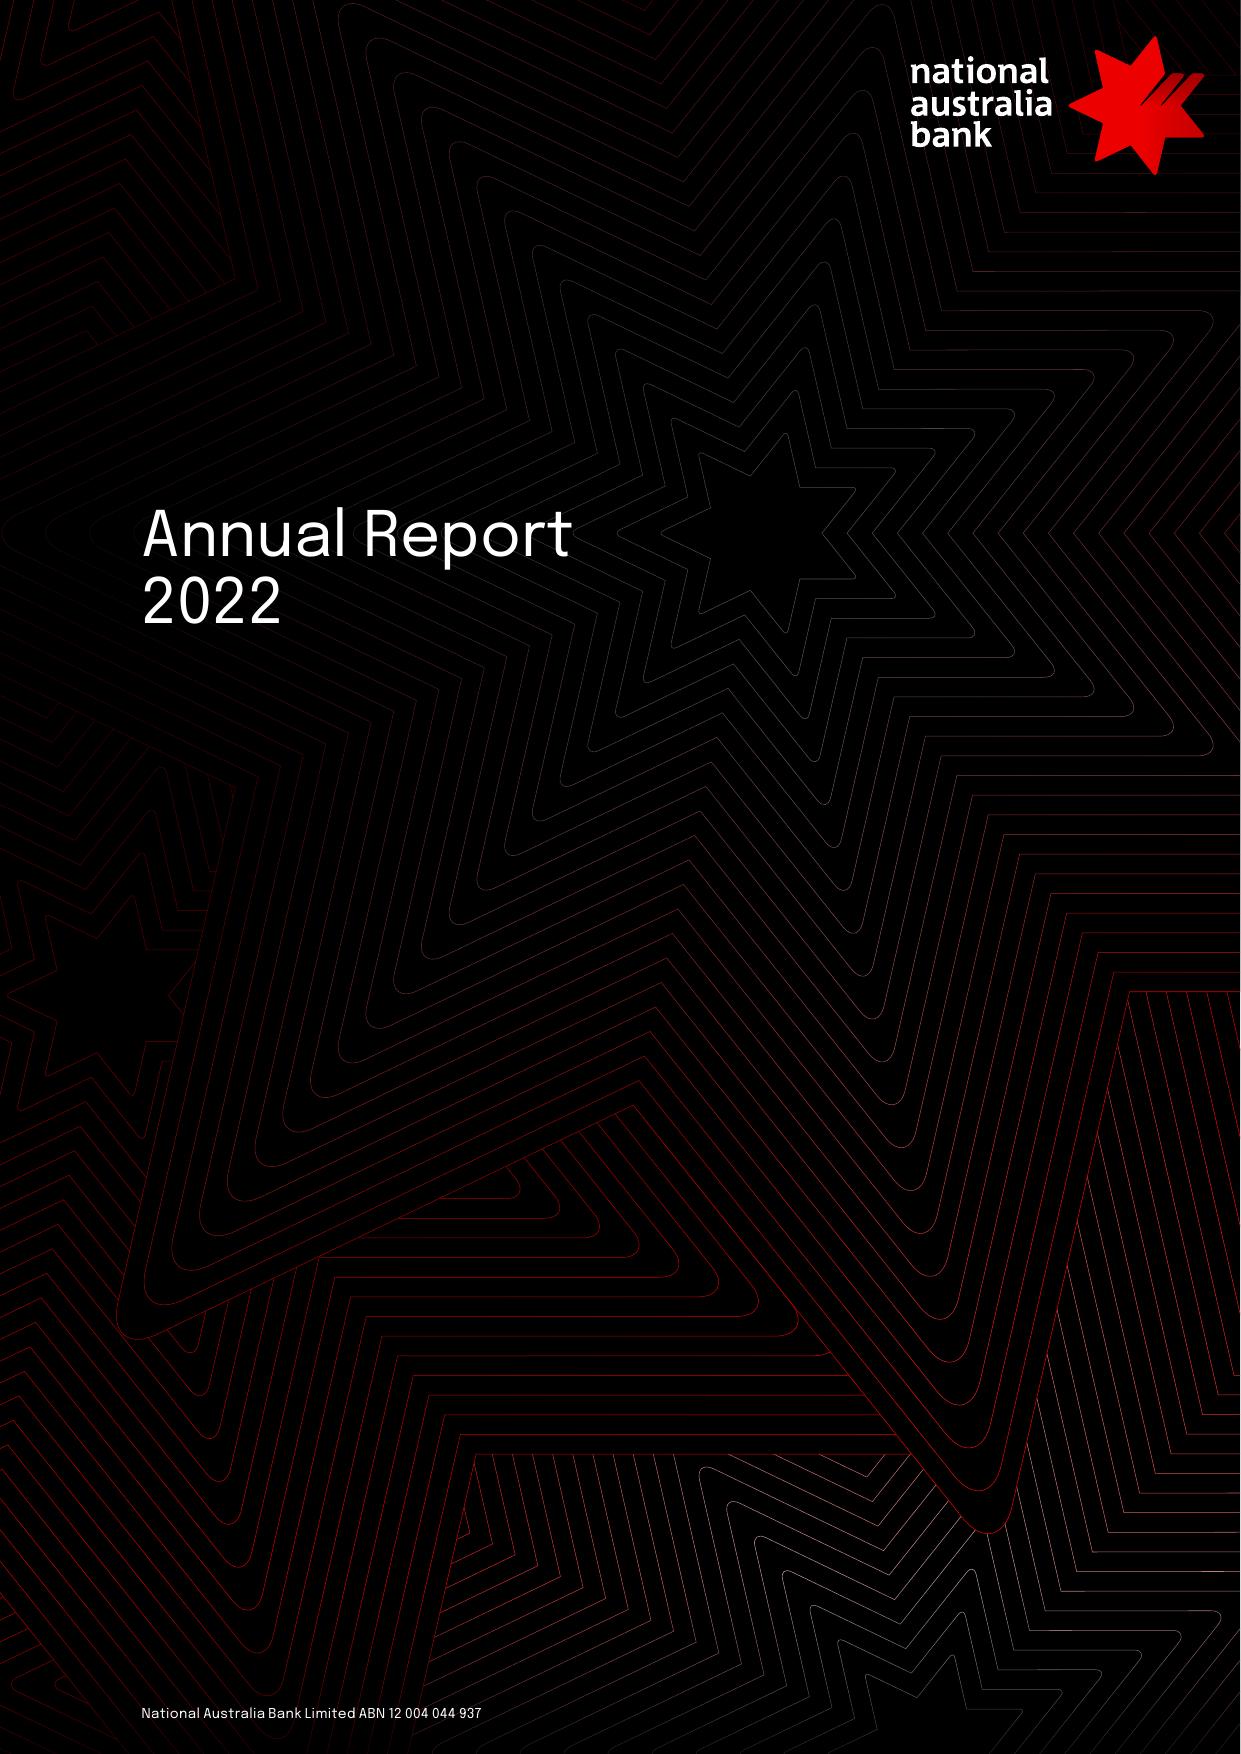 AZETS 2022 Annual Report